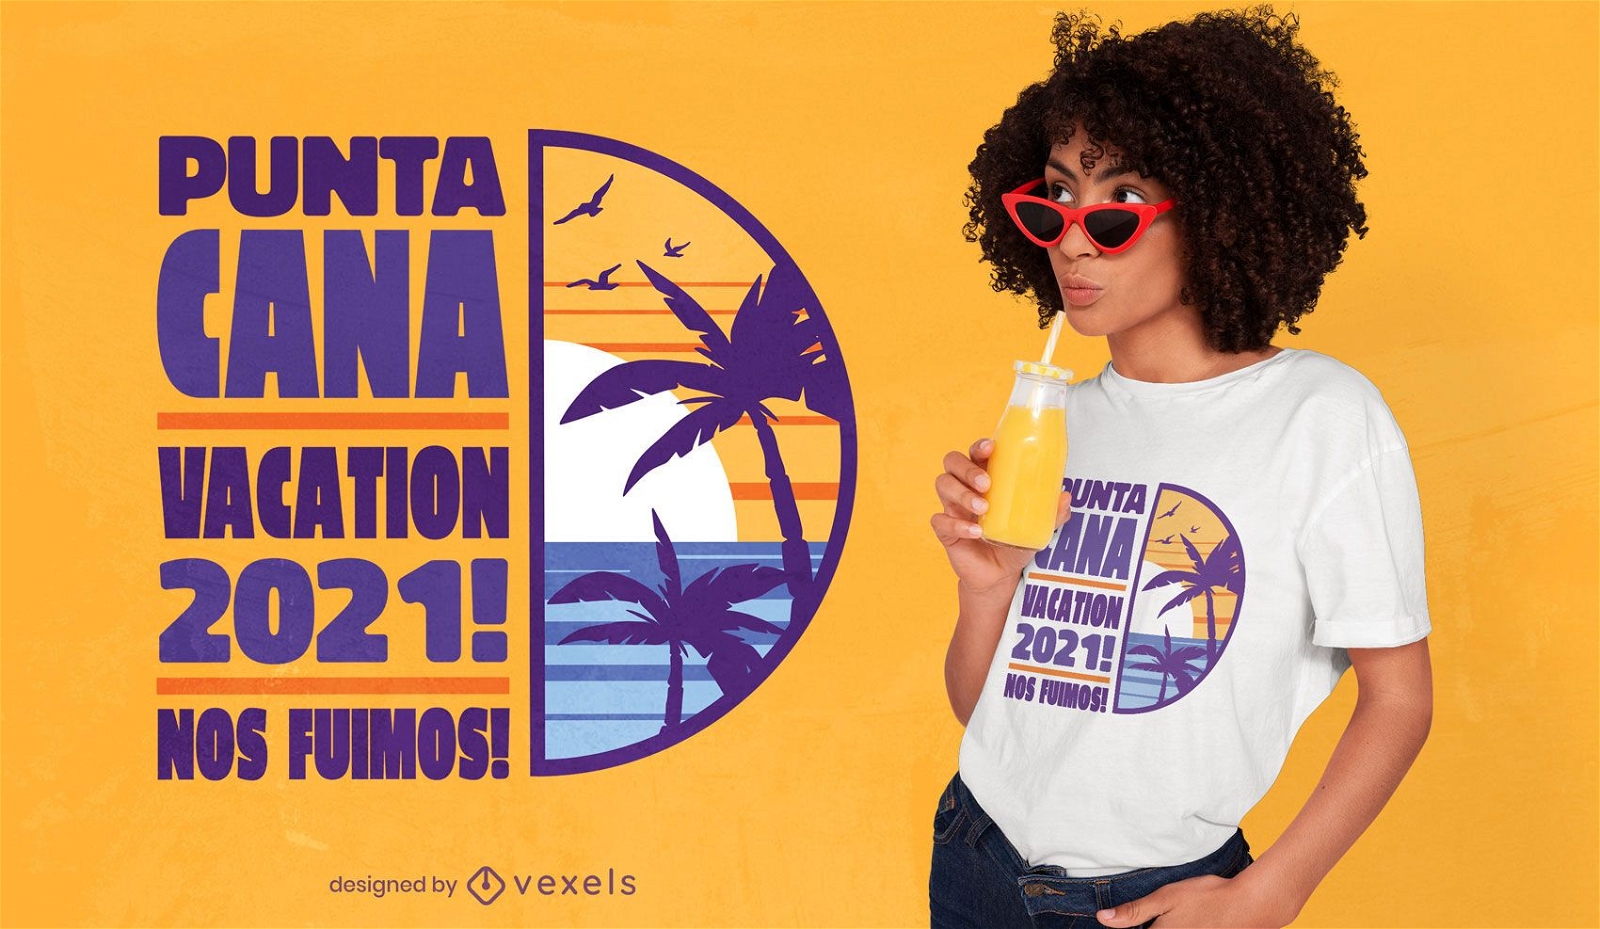 Punta cana vacation quote t-shirt design